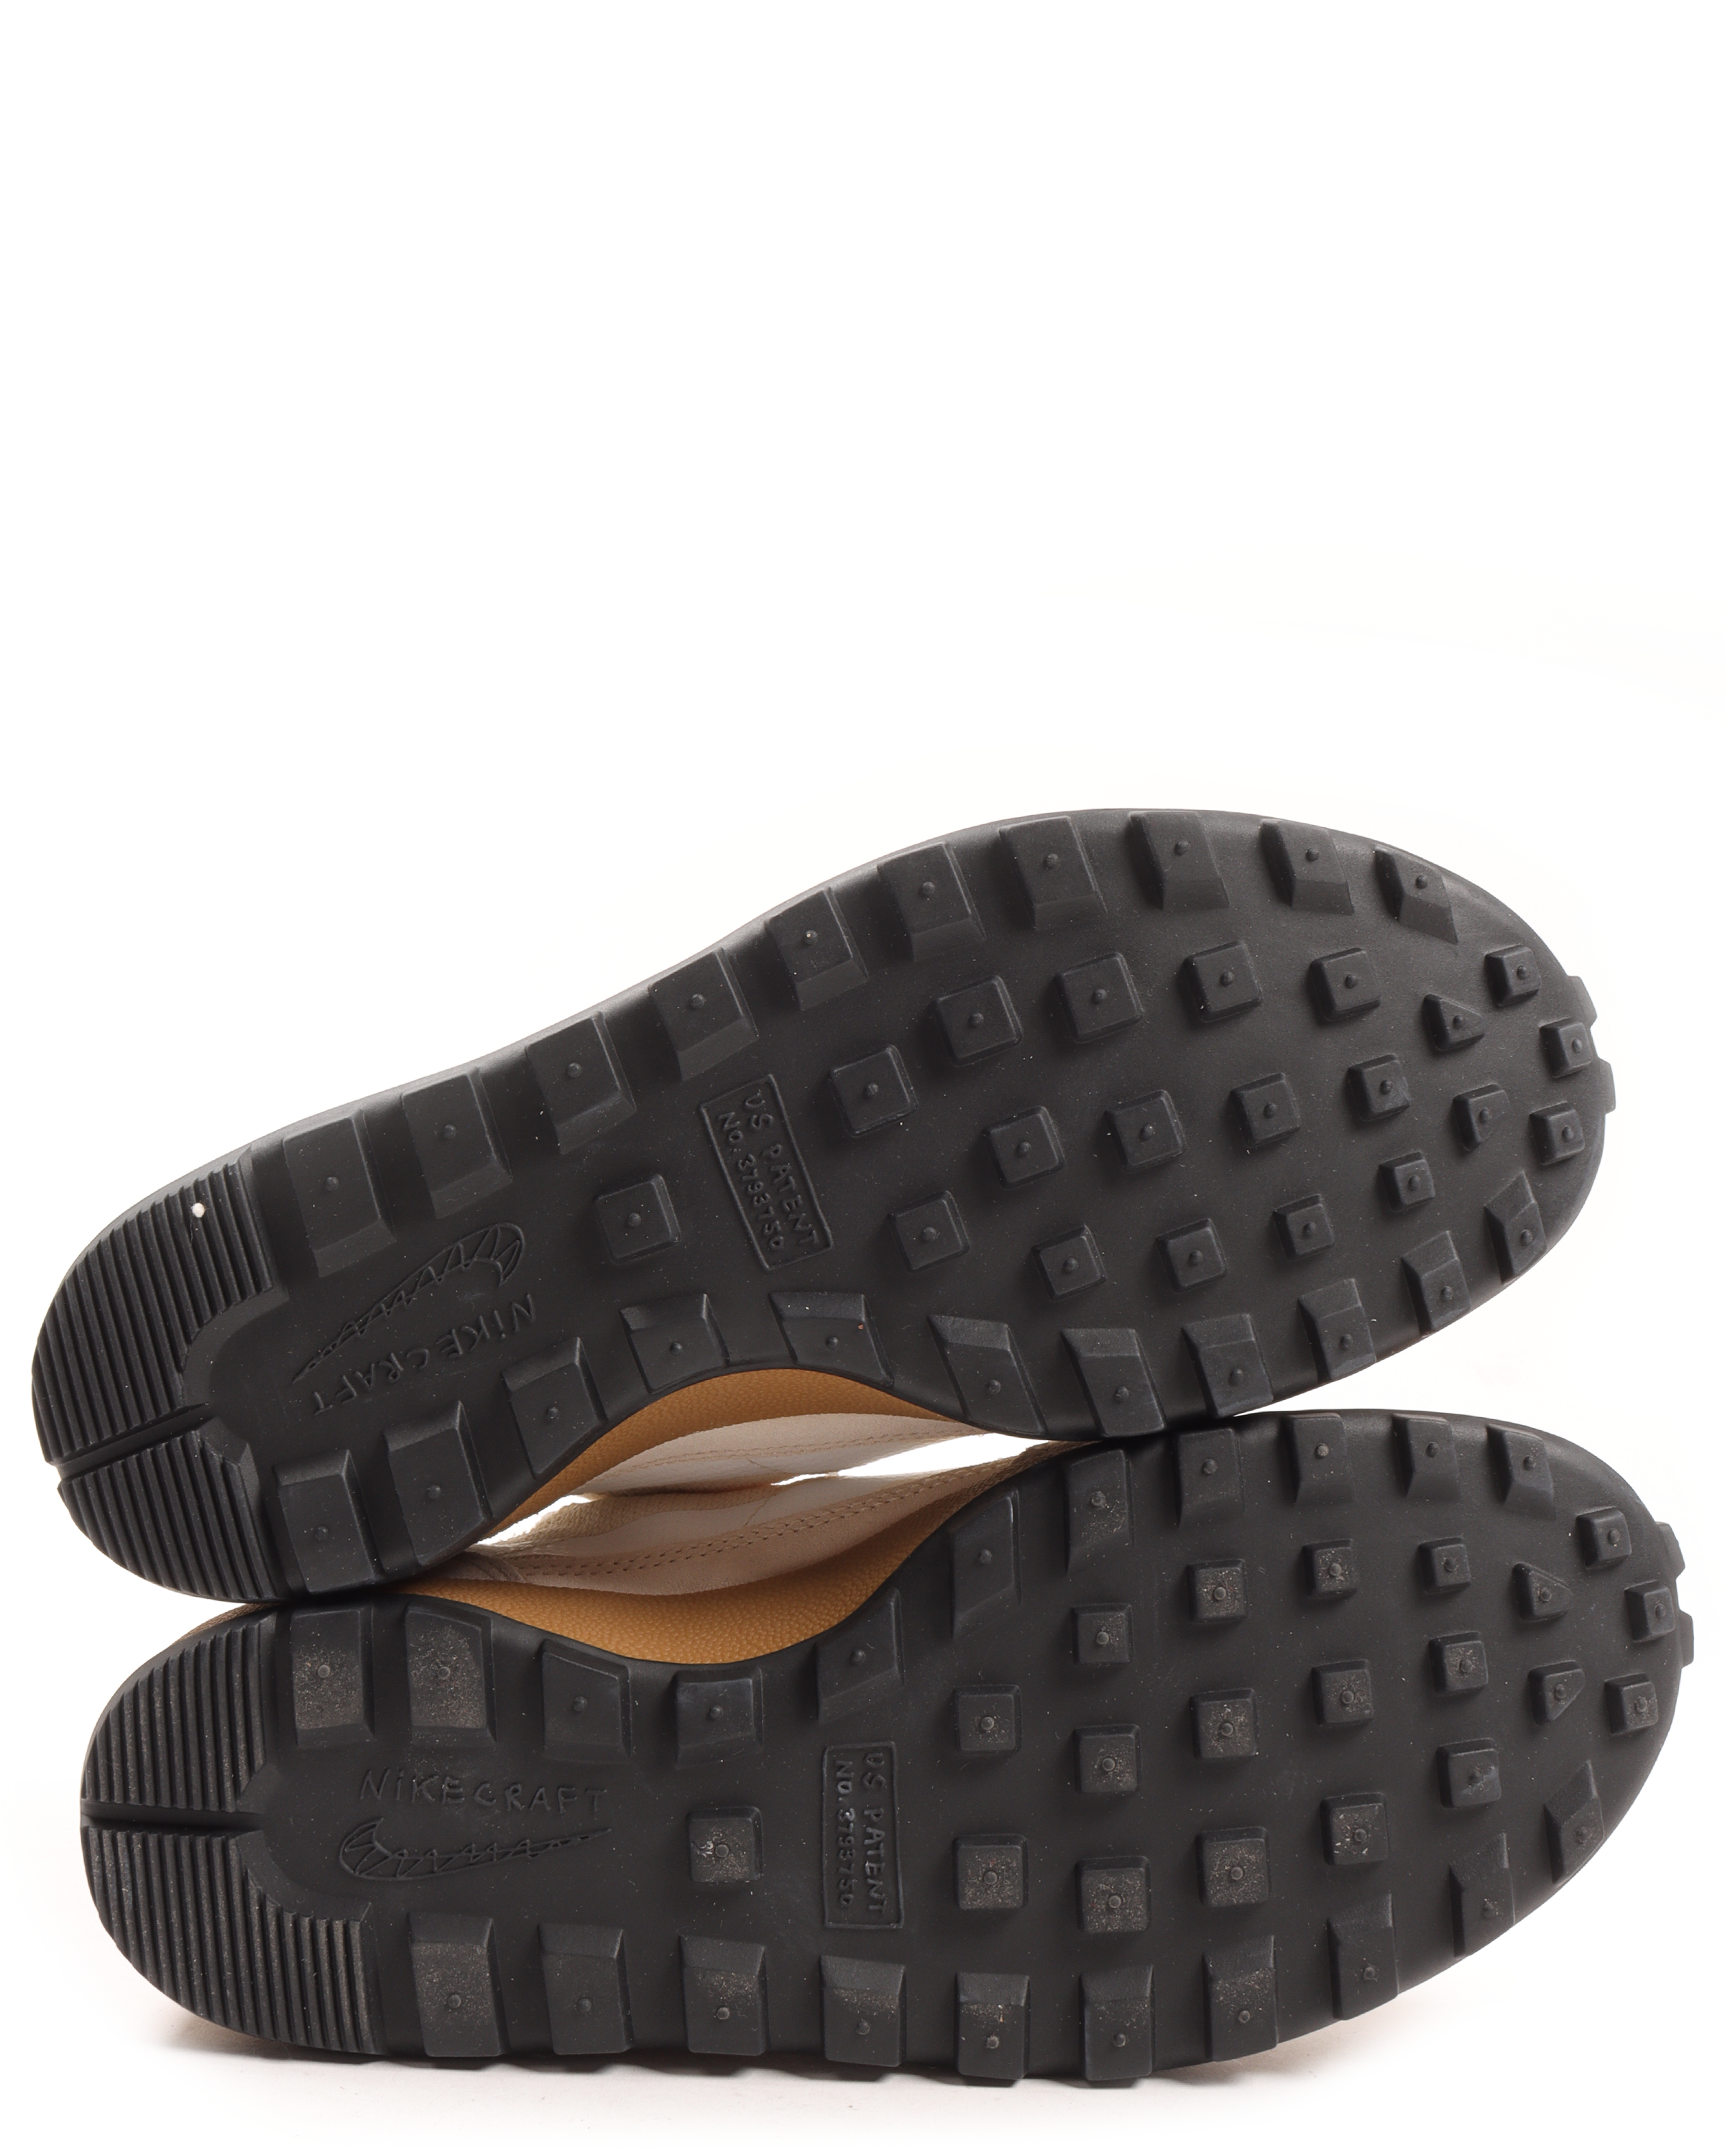 Tom Sachs-Craft General Purpose Shoe